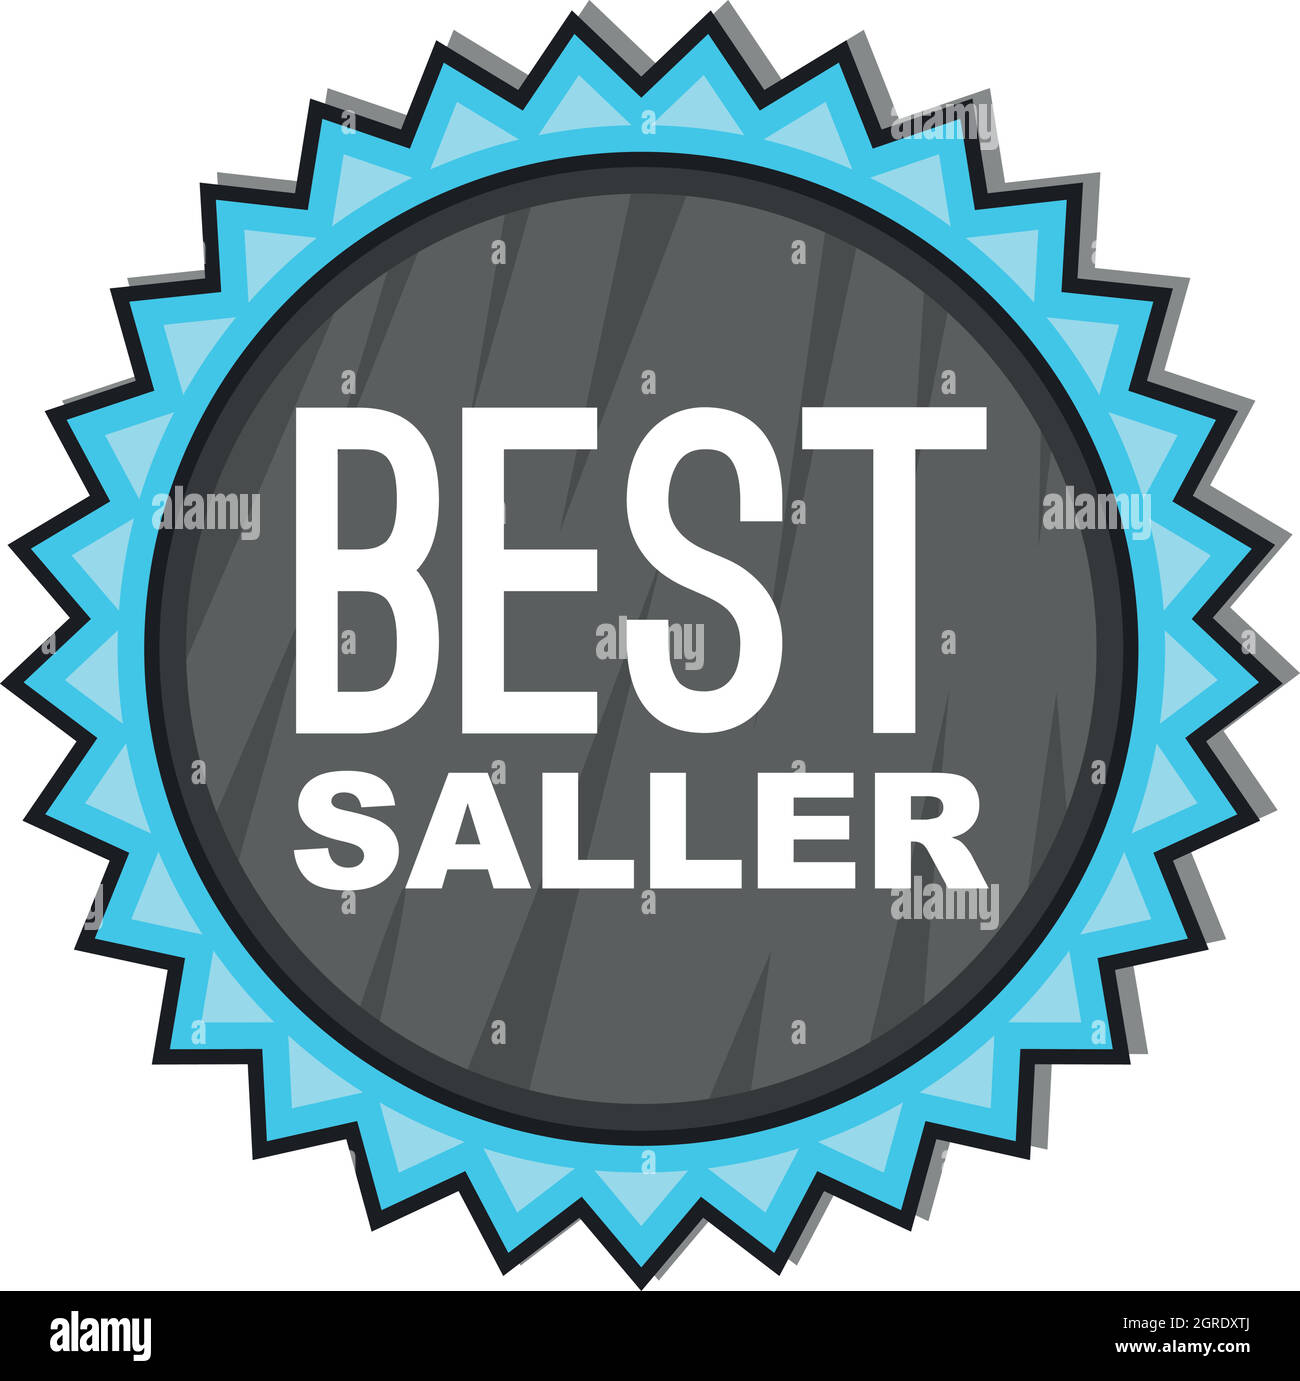 Best seller badge icon, cartoon style Stock Vector Image & Art - Alamy